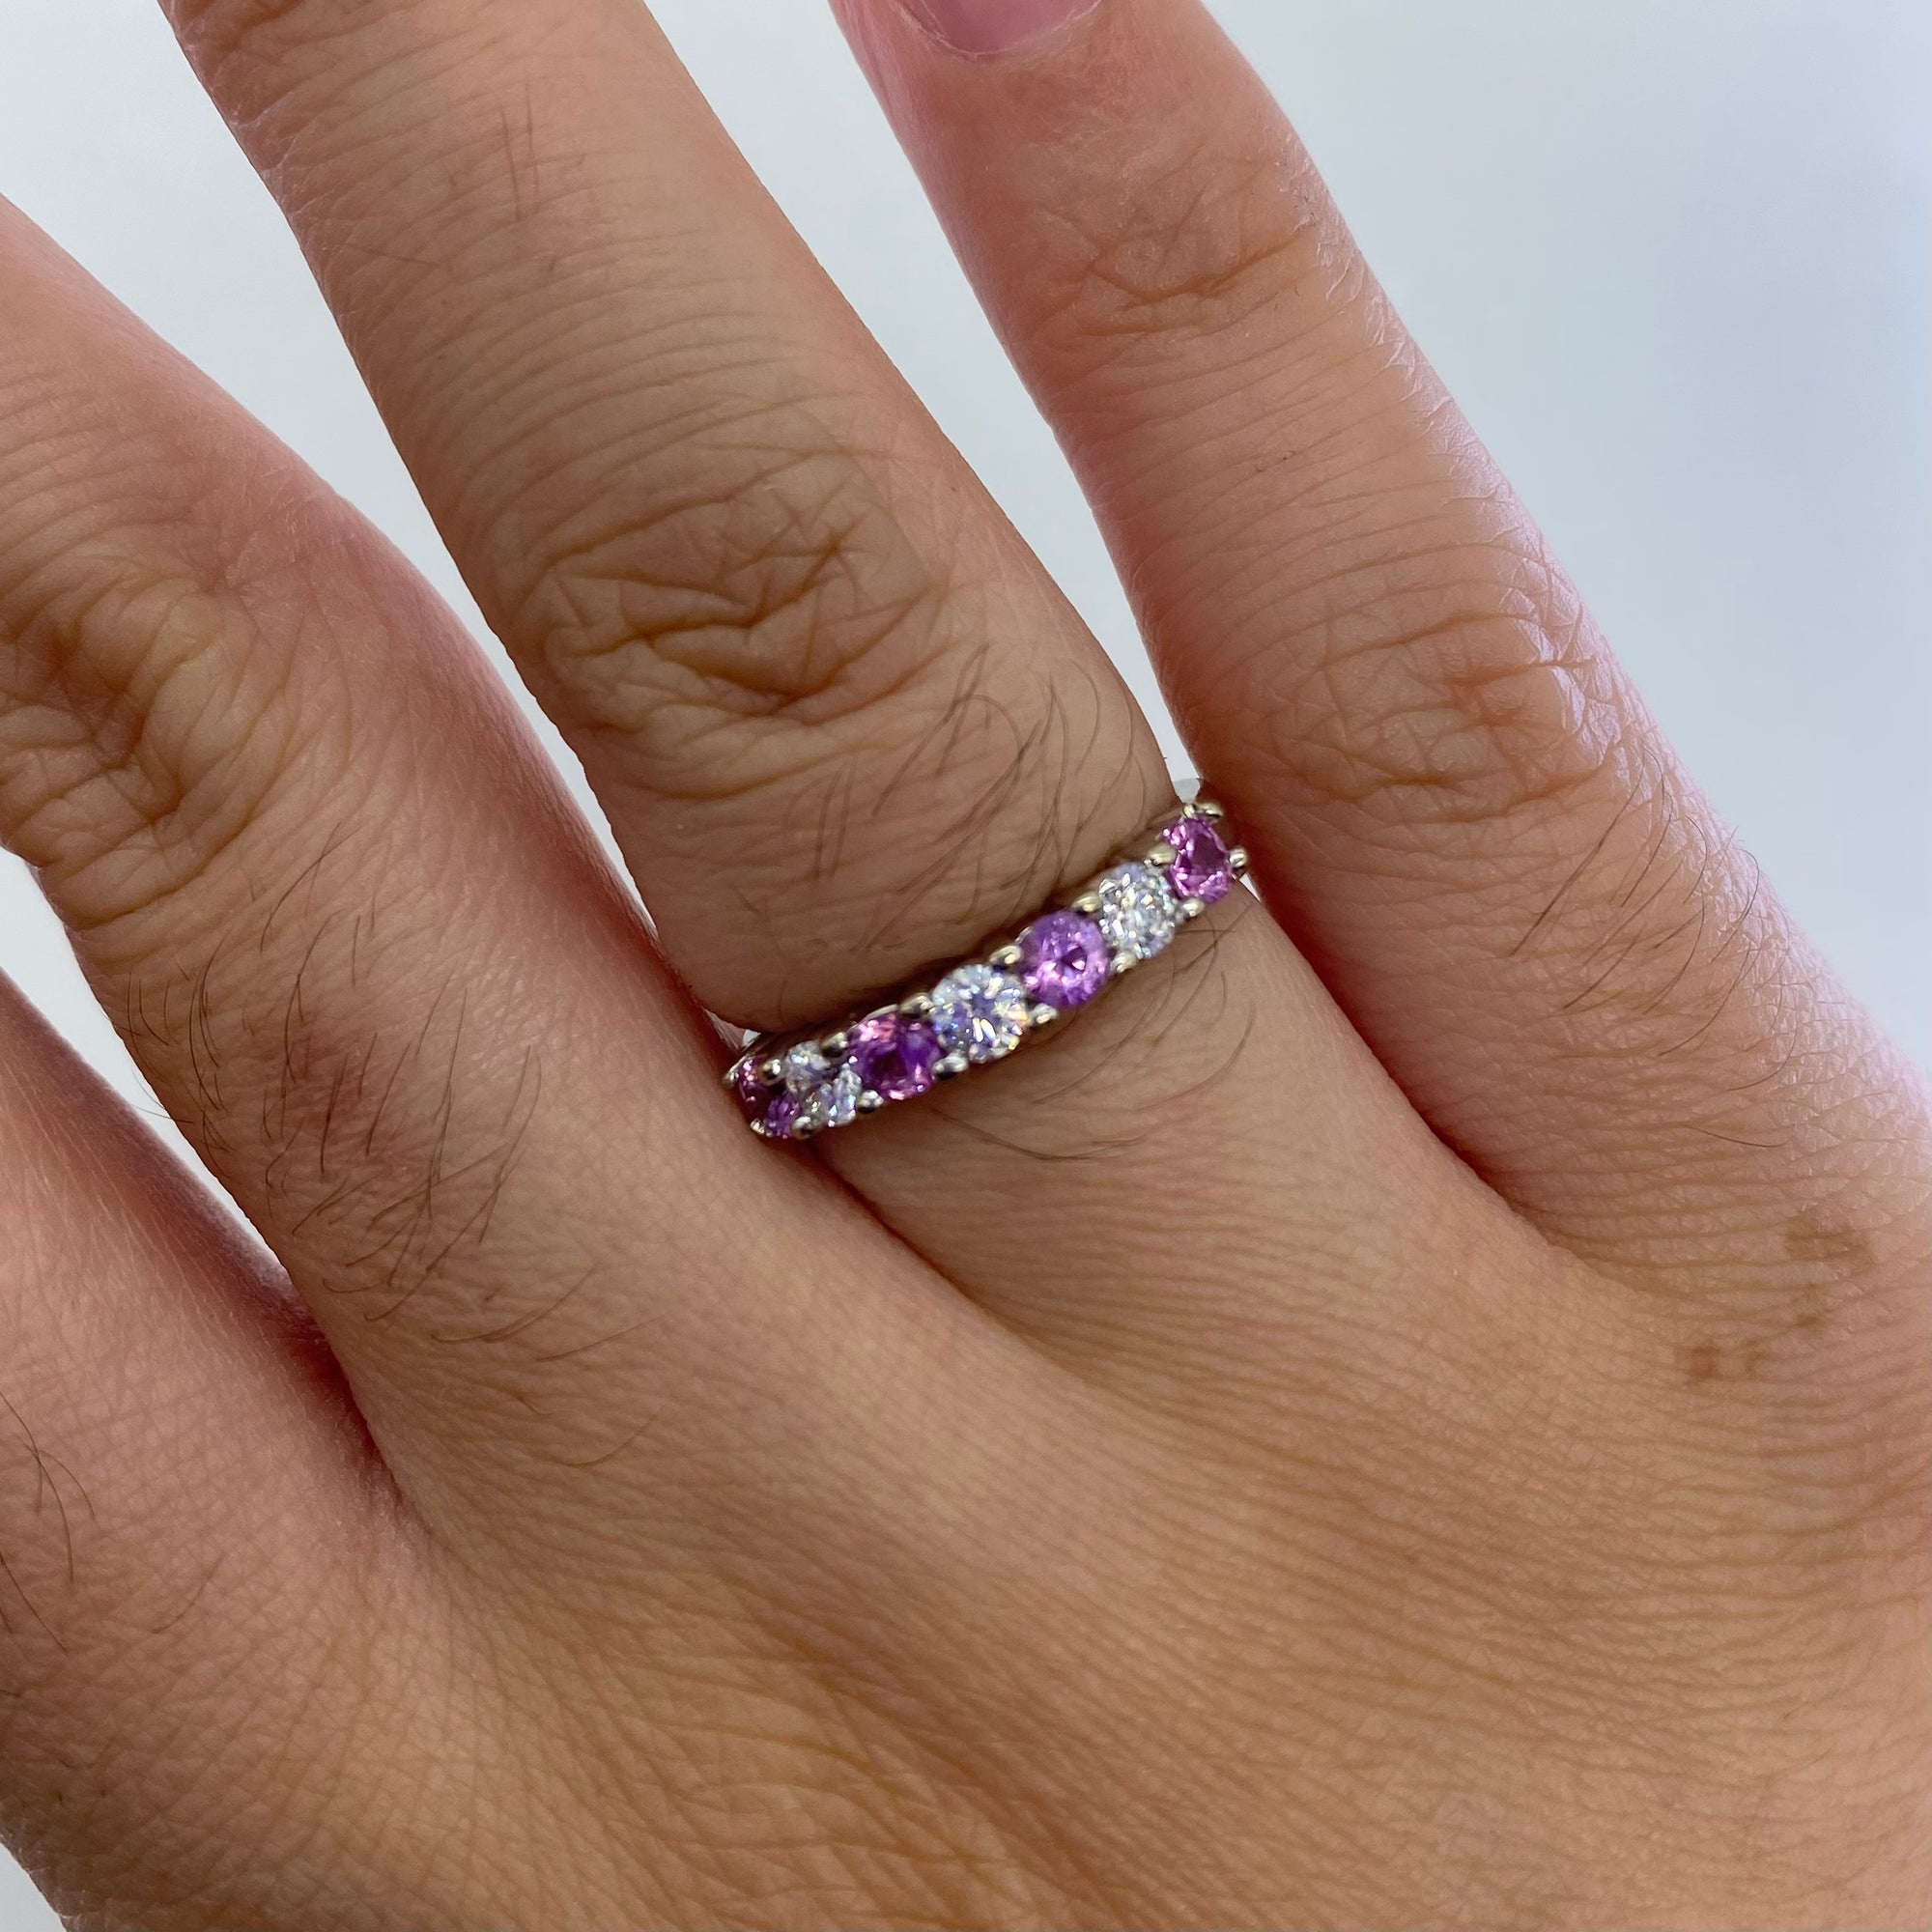 18k Pink Sapphire and Diamond Ring | 0.36ctw, 0.28ctw | SZ 5 |